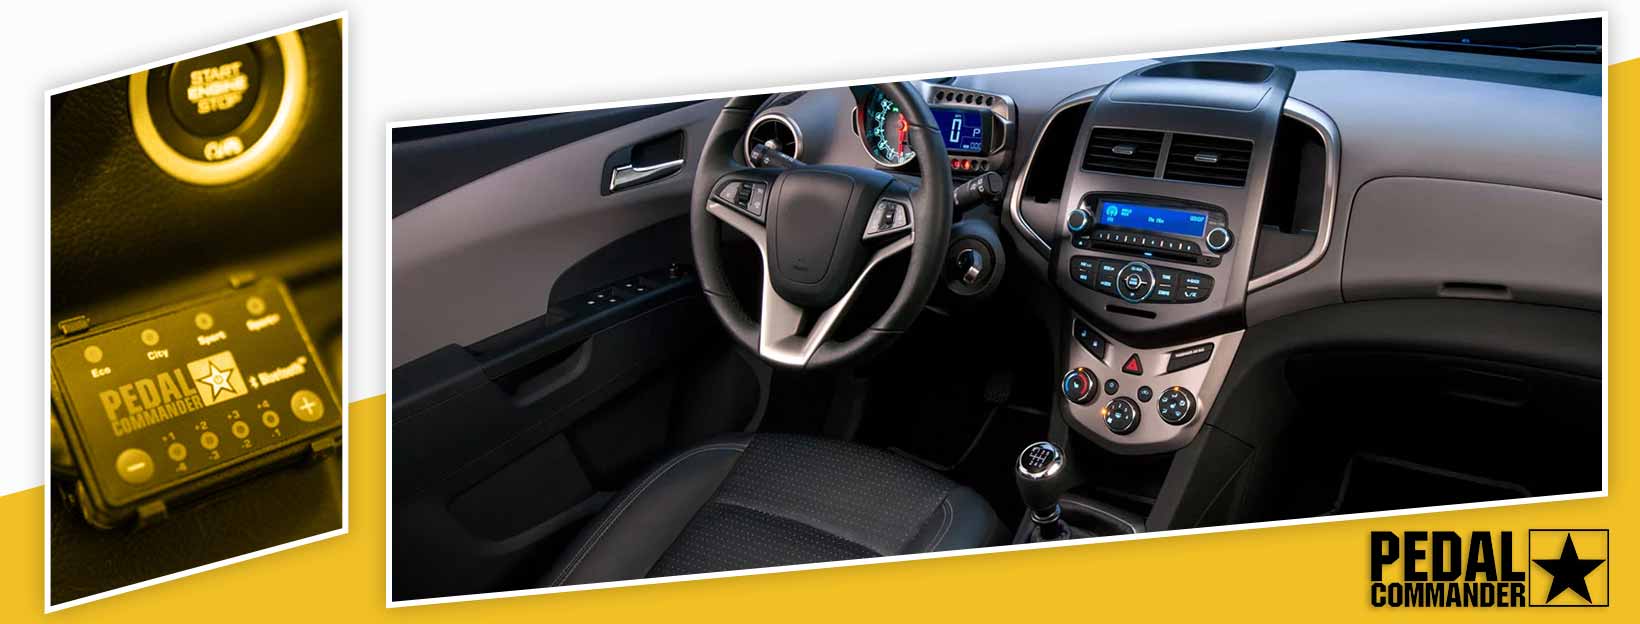 Pedal Commander for Chevrolet Aveo - interior